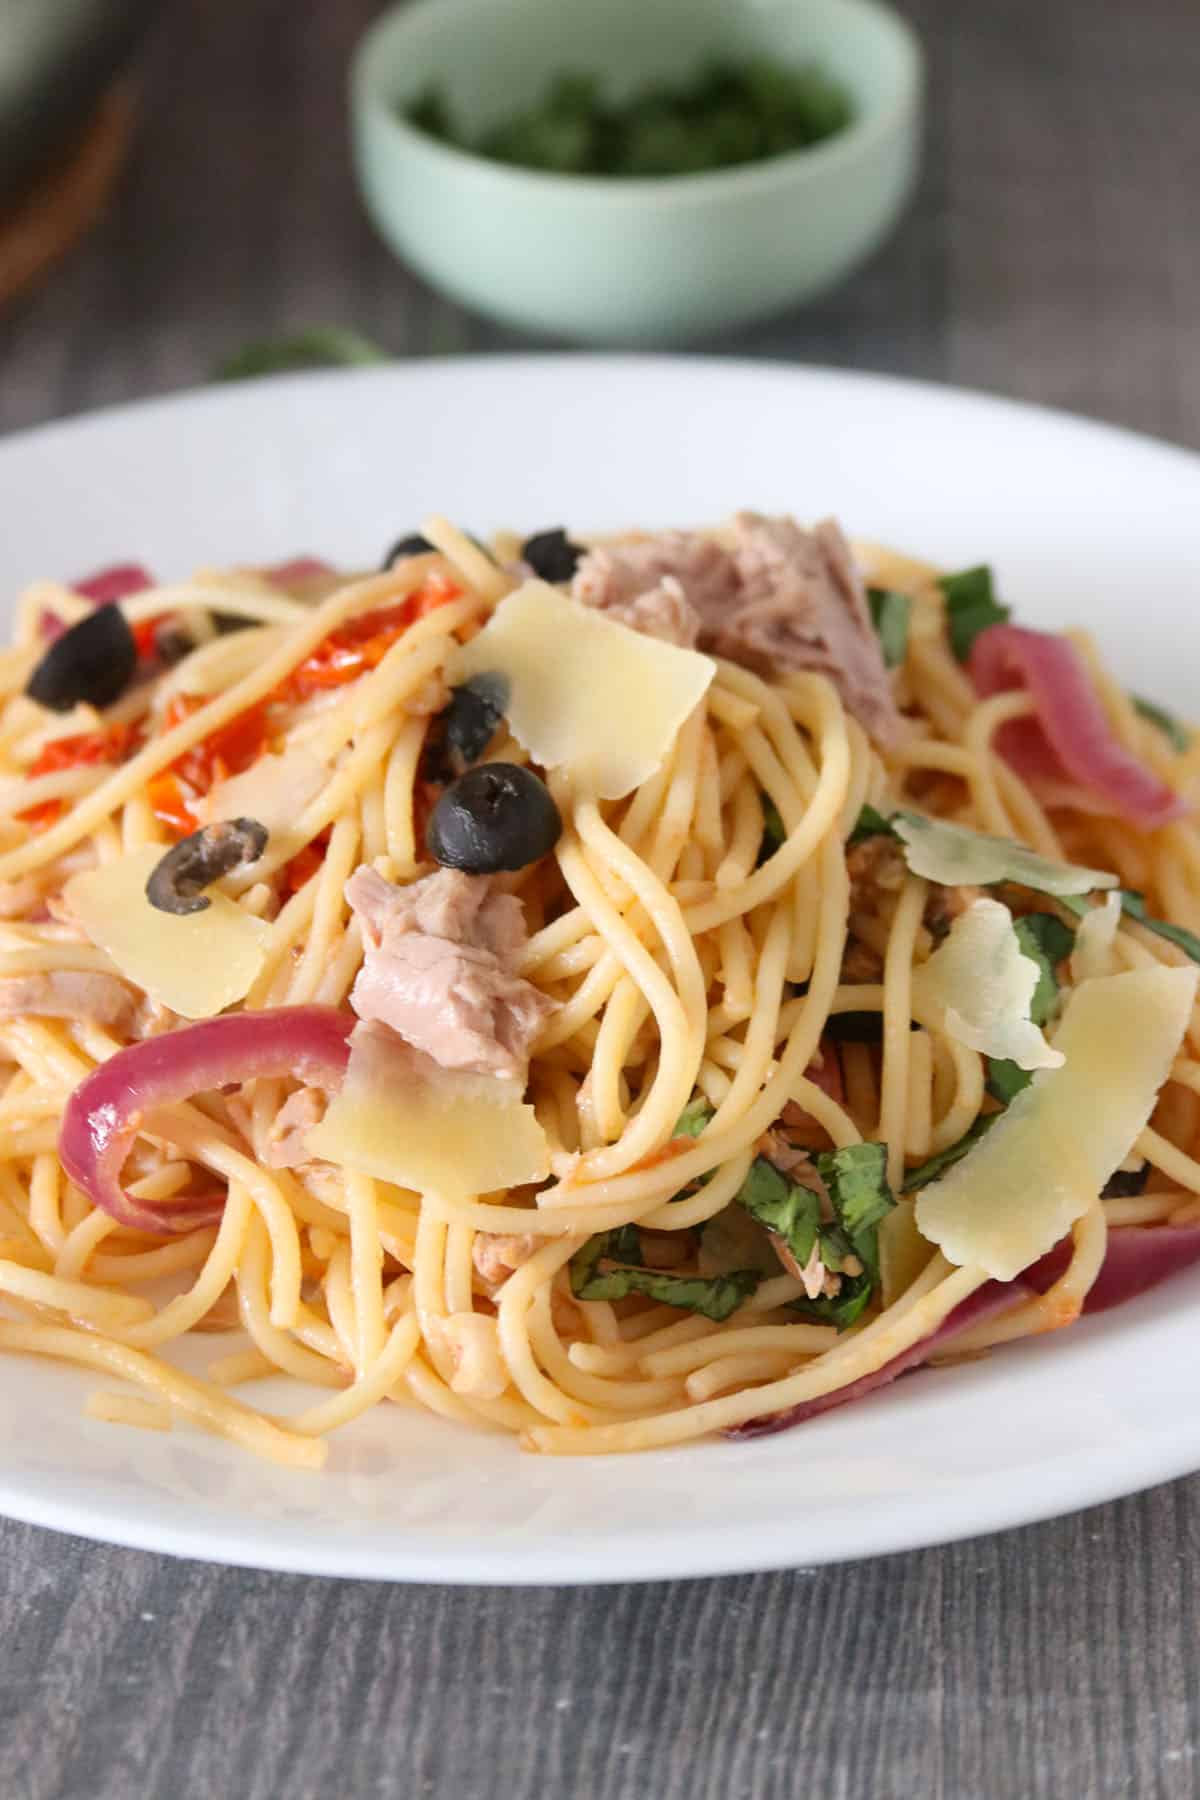 Tuna pasta served on a plate.